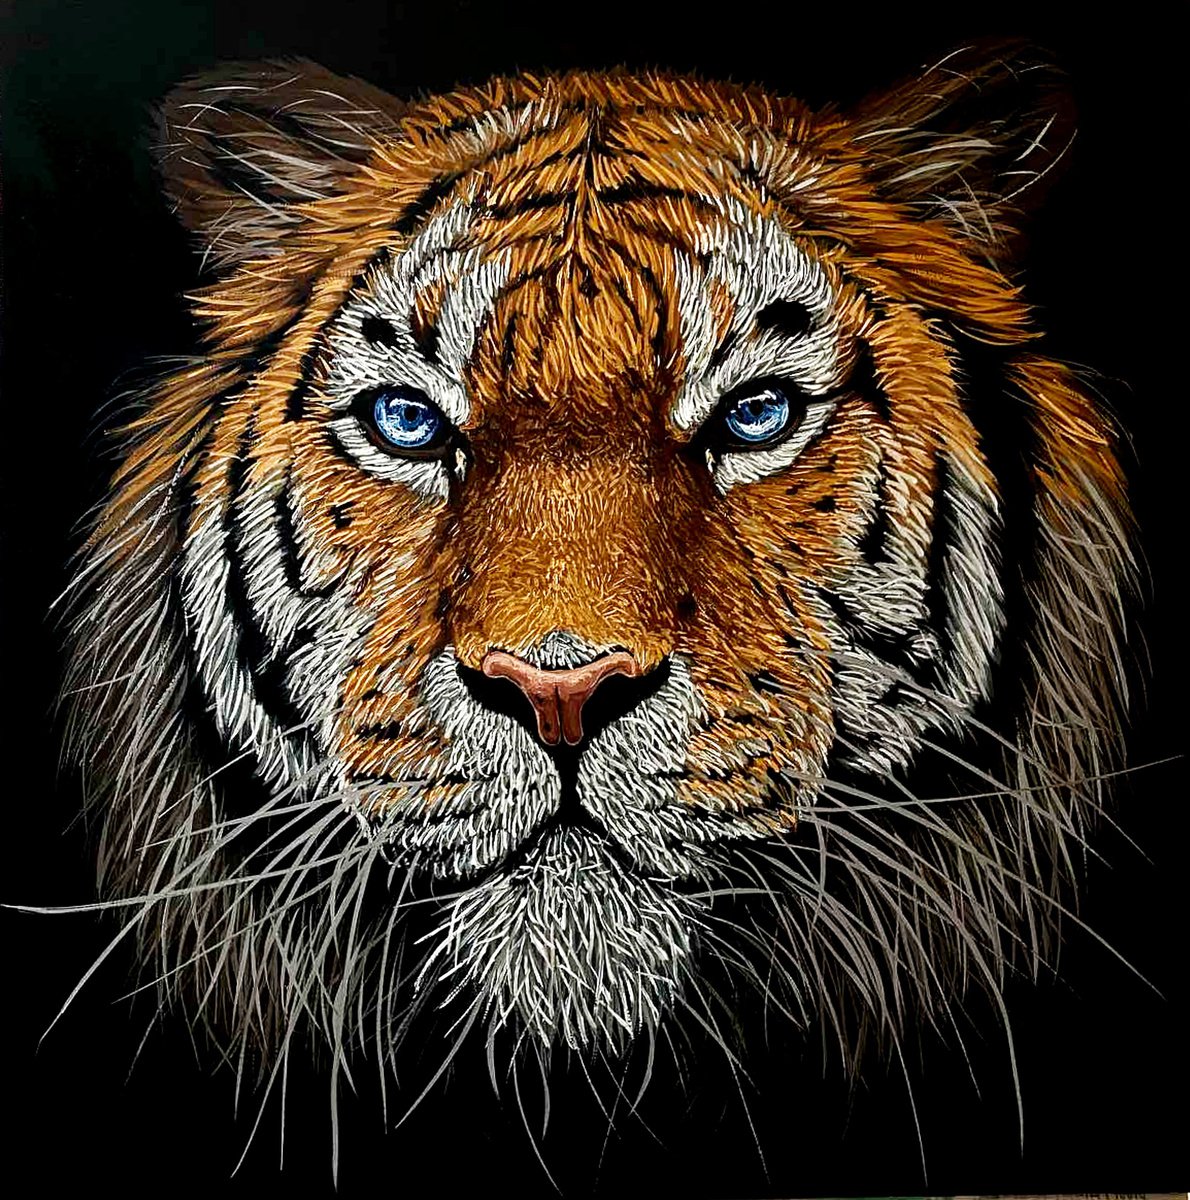 Tiger - wild cat / wild life / wild animal / animalism by Elena Adele Dmitrenko